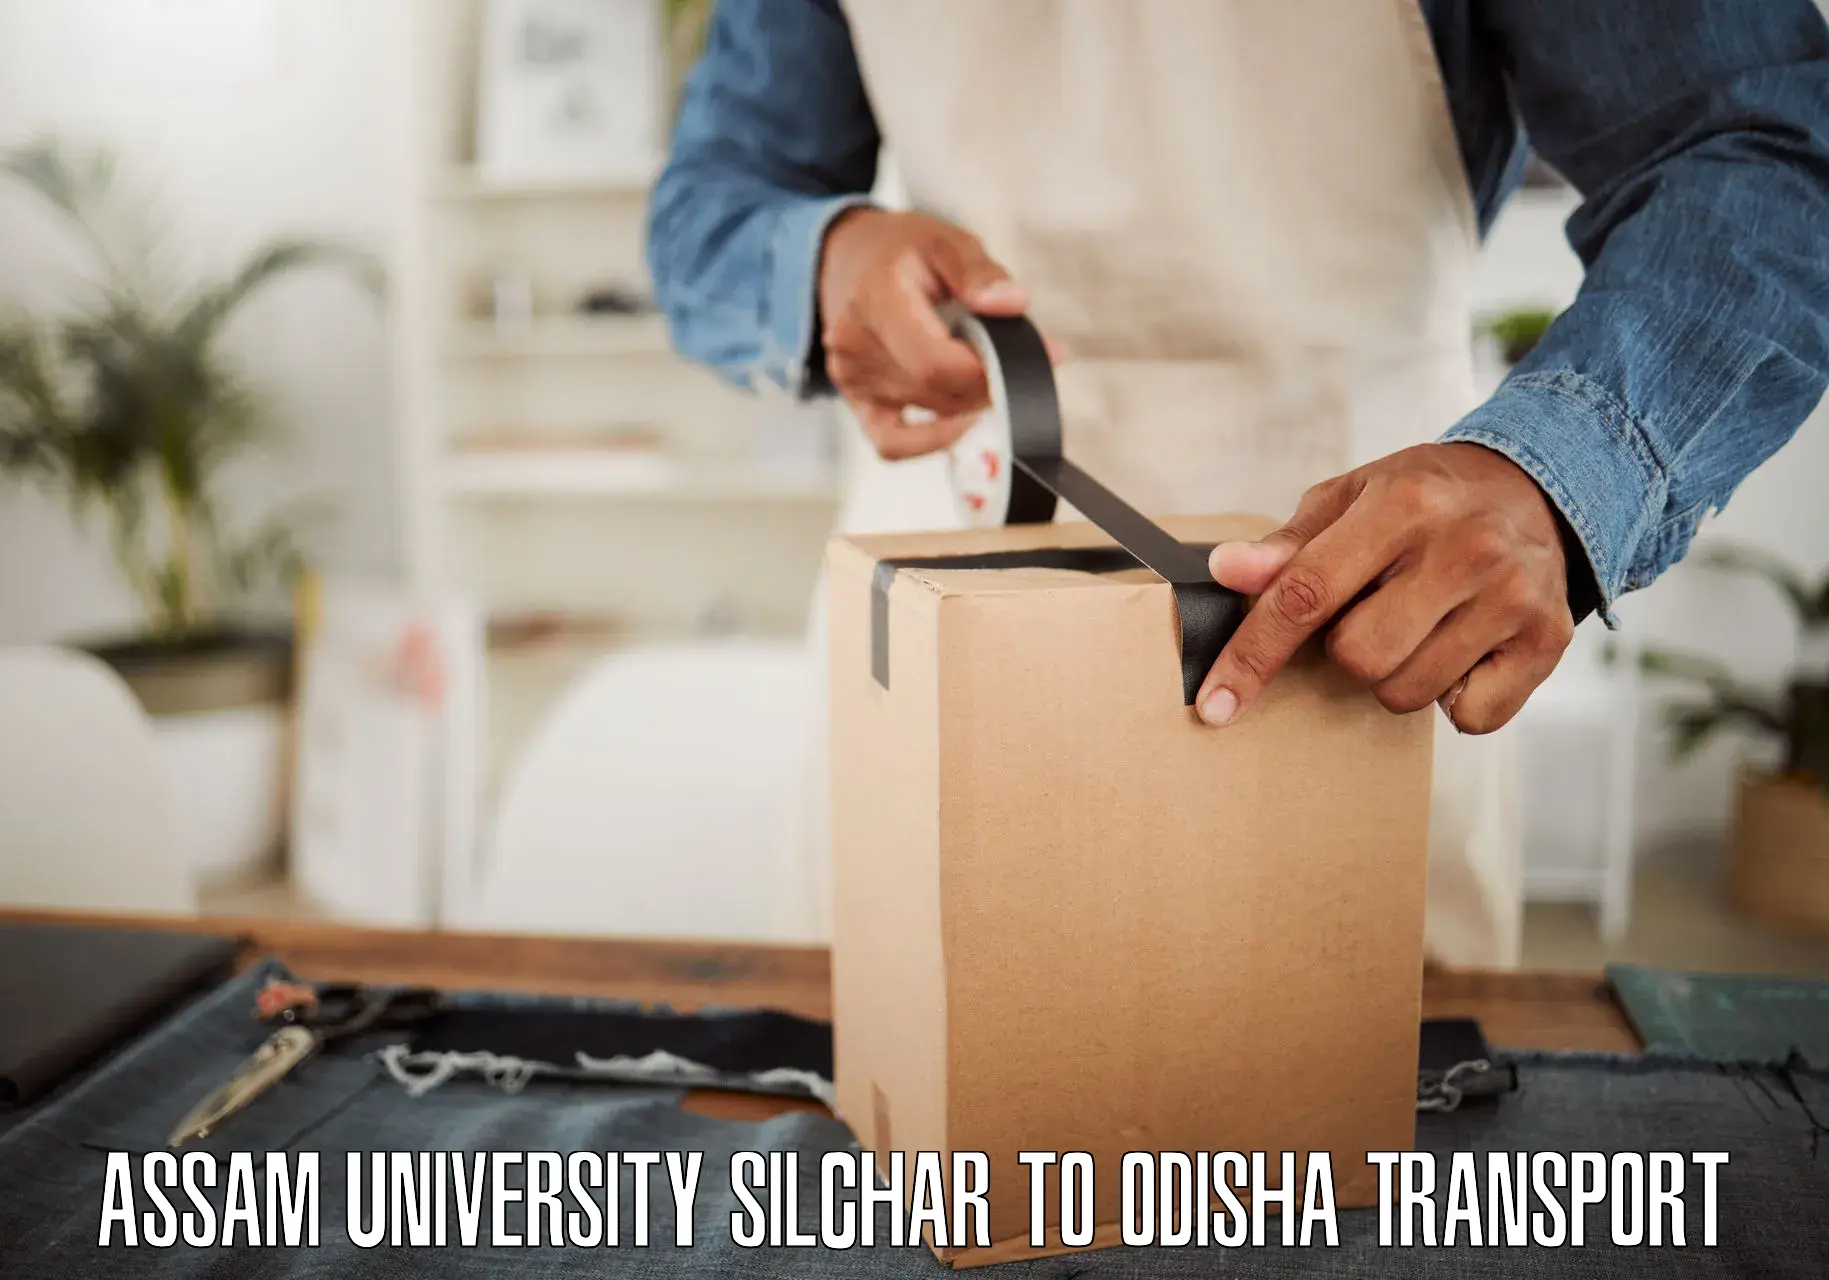 Commercial transport service Assam University Silchar to Jeypore